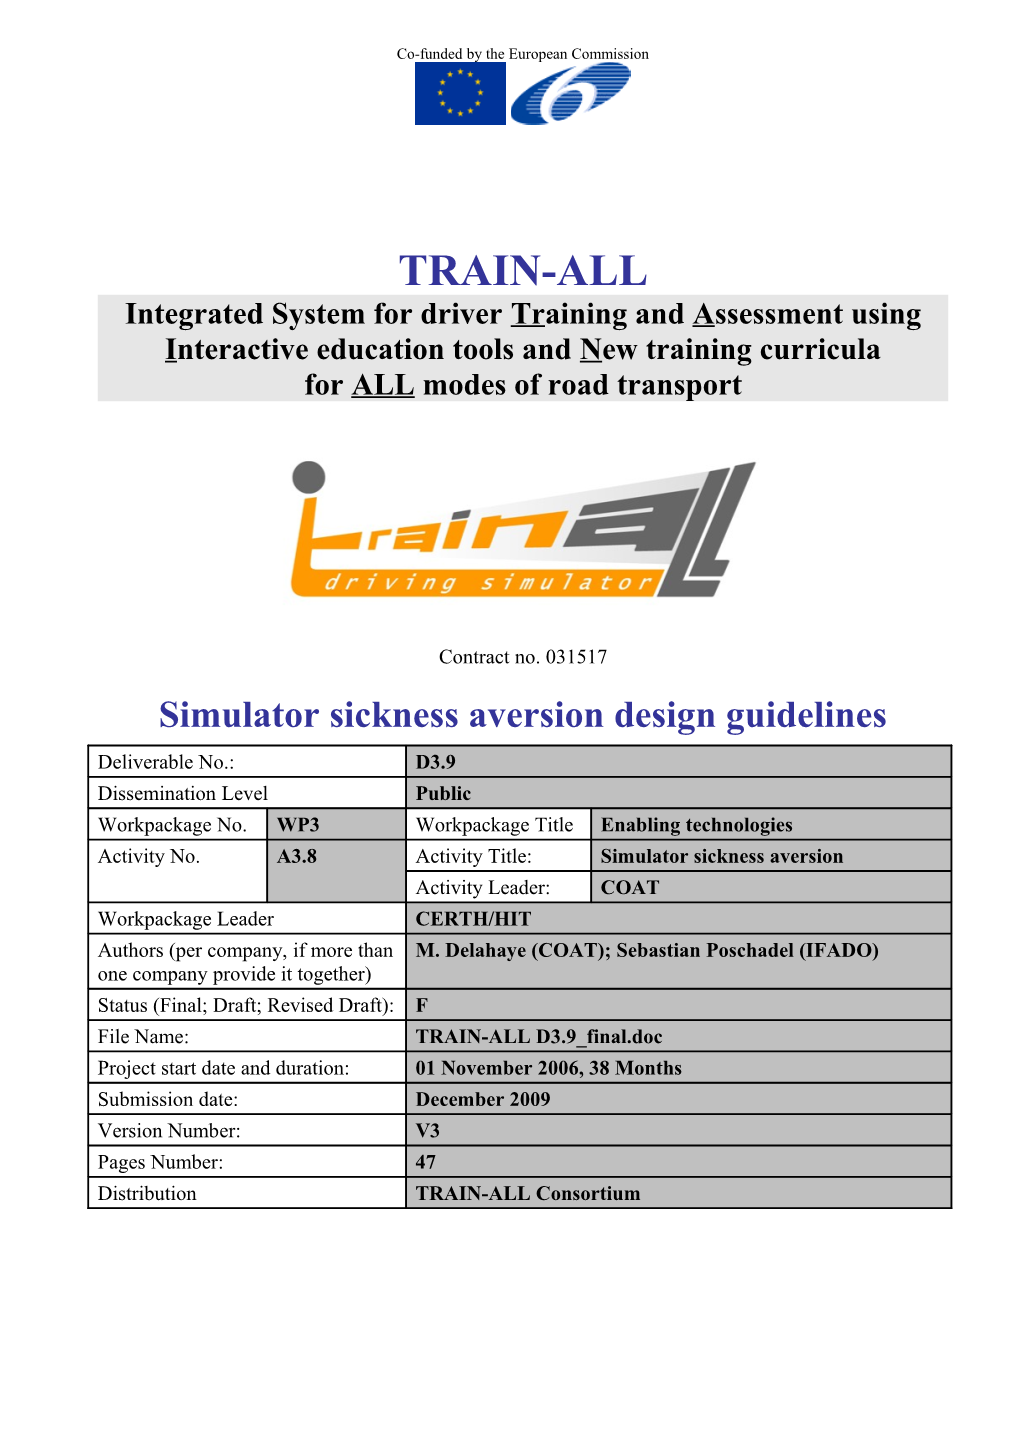 Simulator Sickness Aversion Design Guidelines